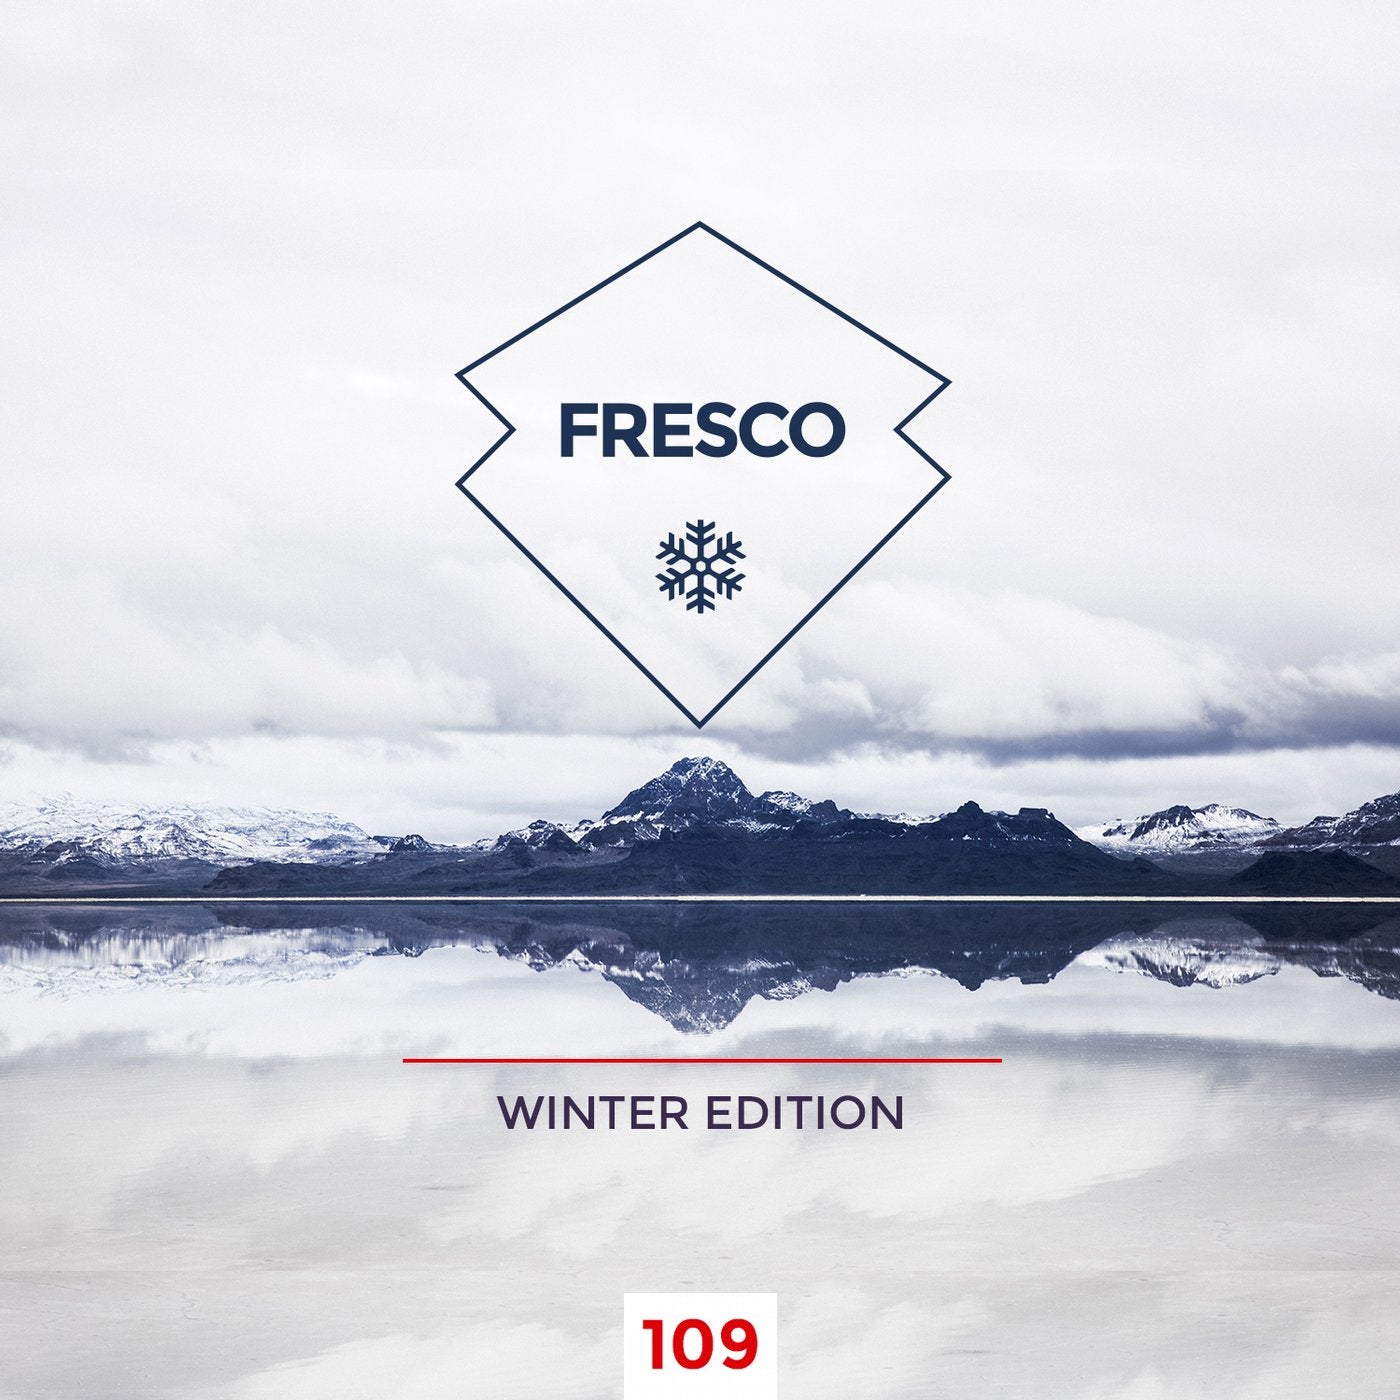 Fresco Winter Edition